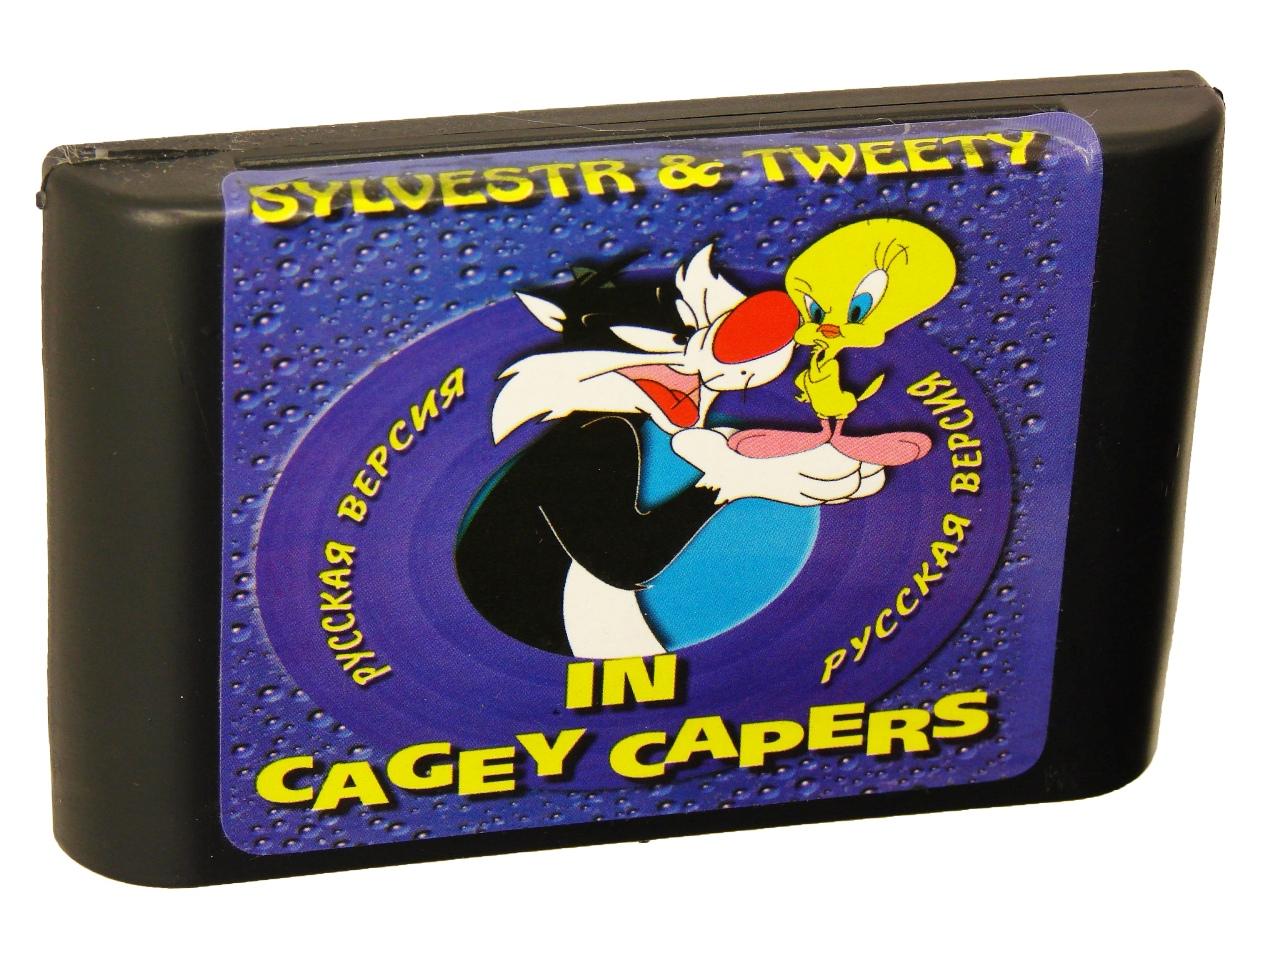   Sega Sylvestr & Tweety in cagey capers (Sega)